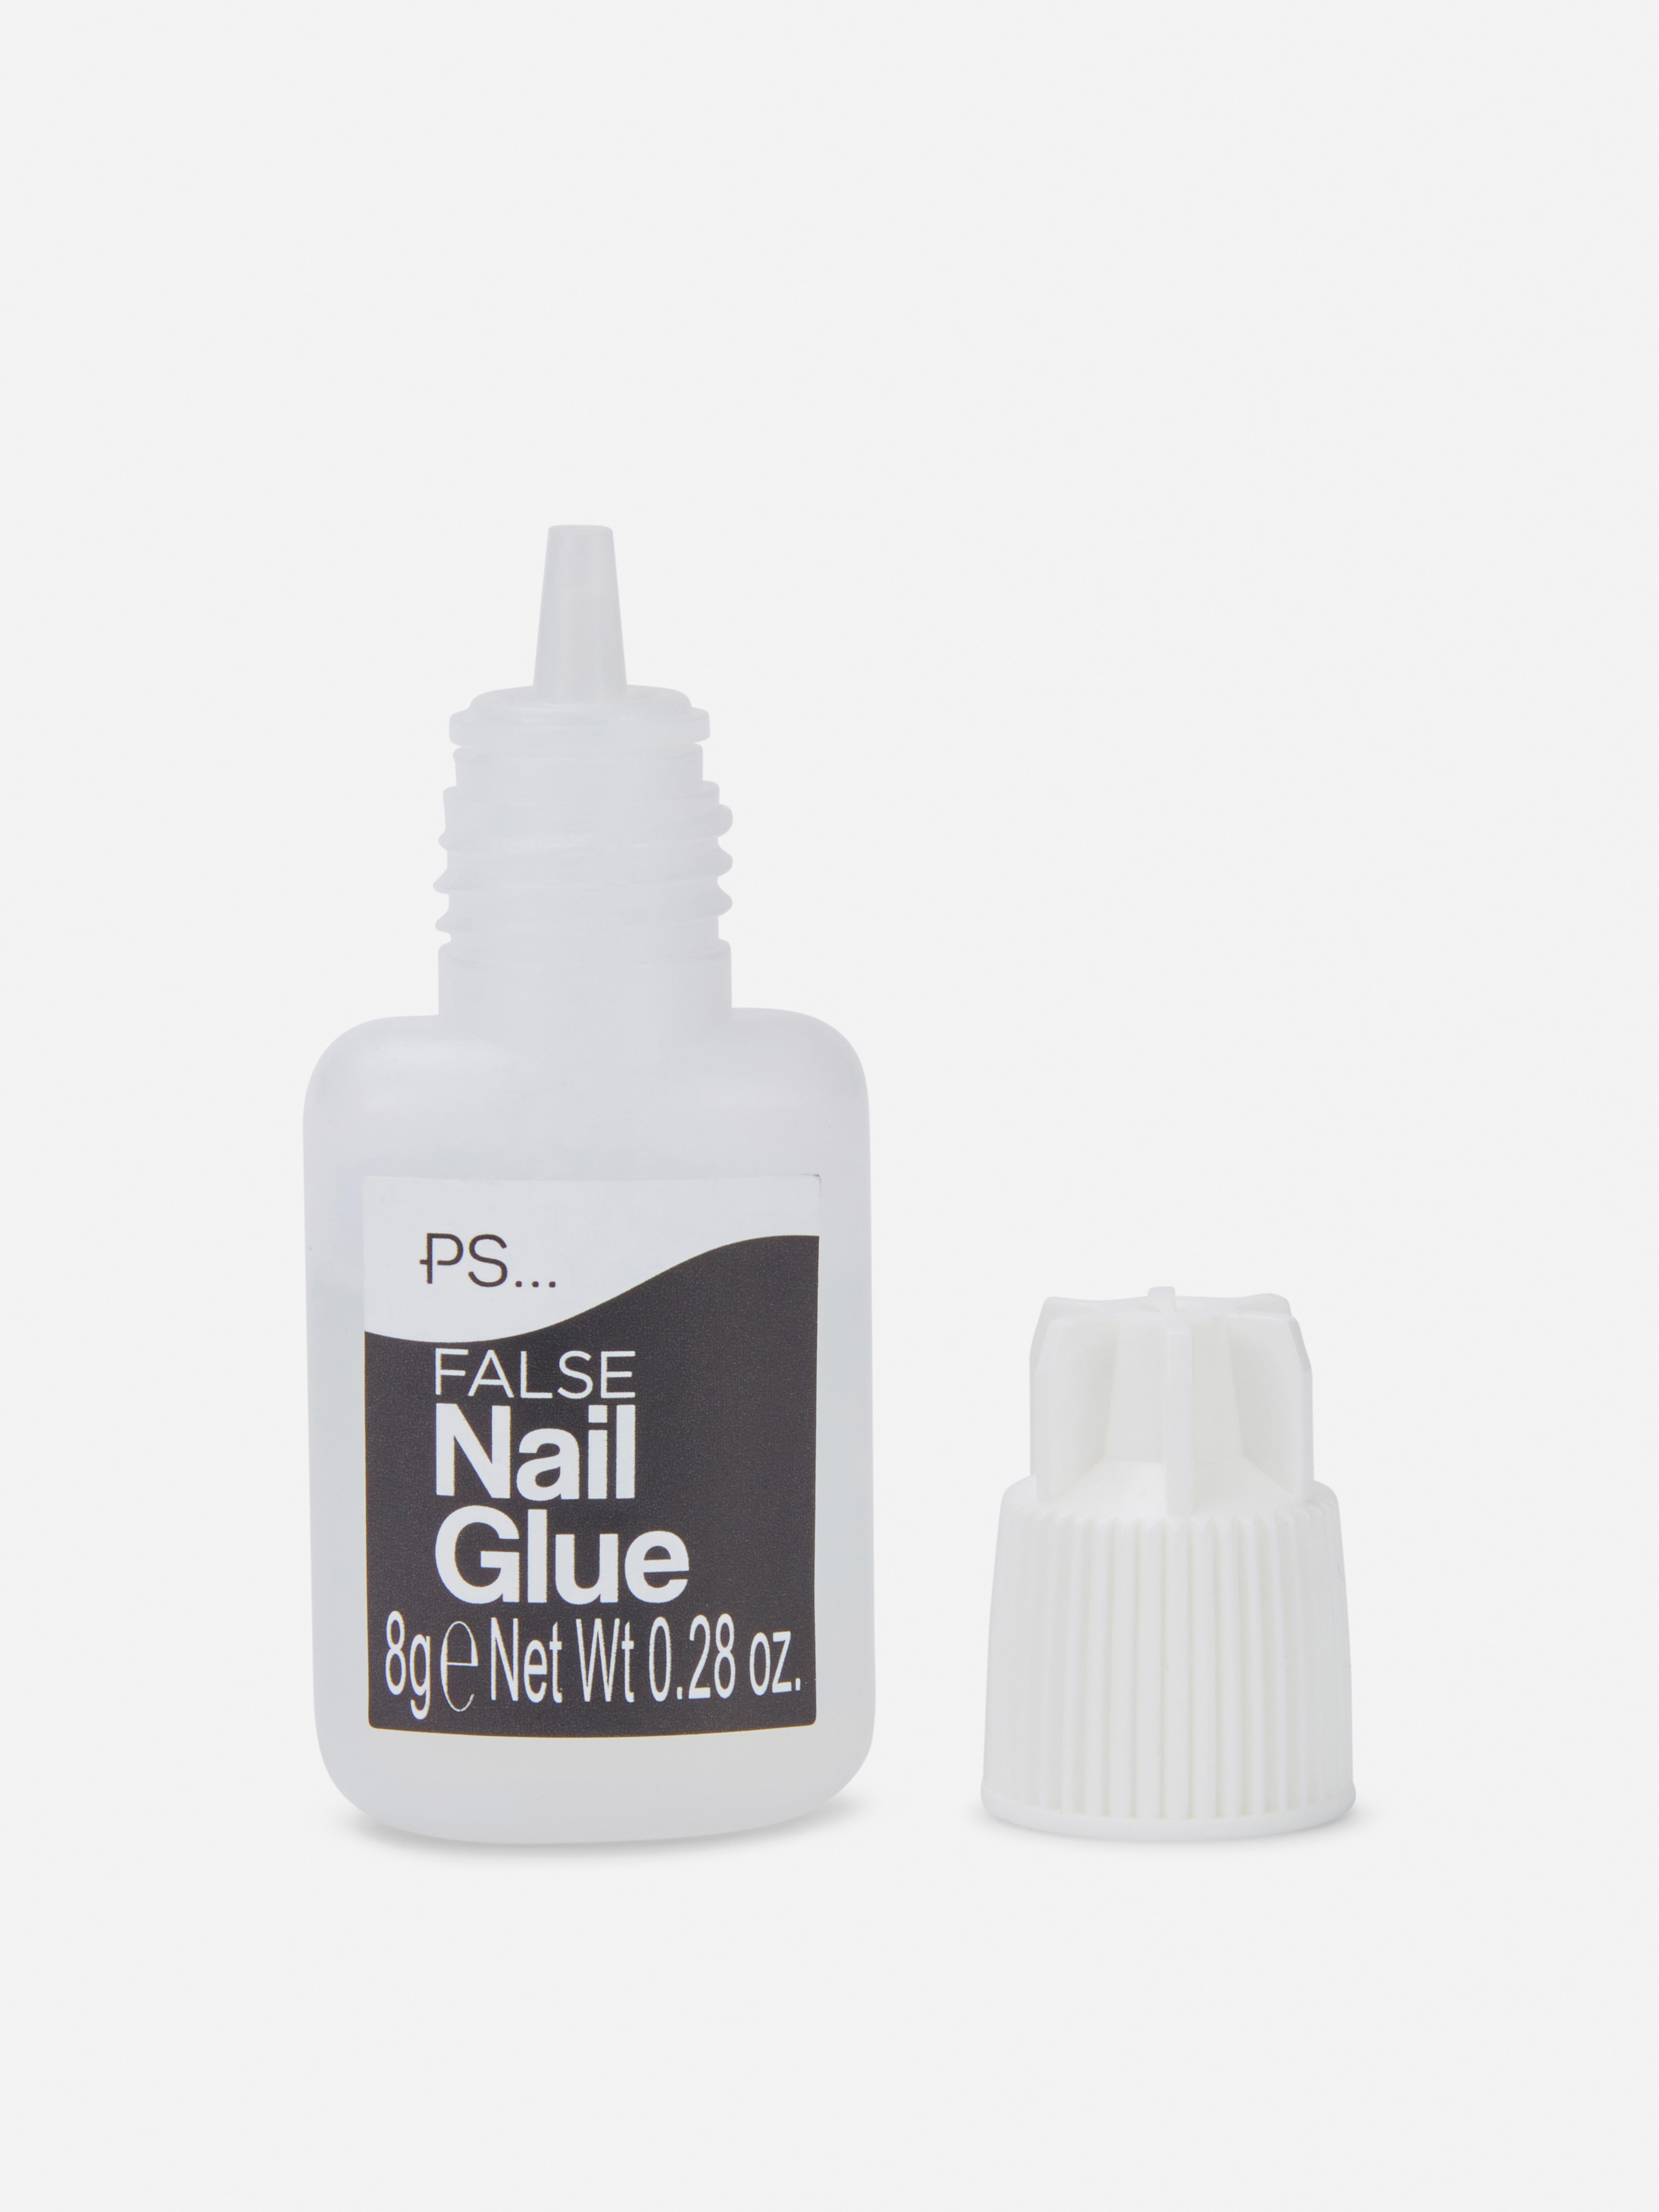 PS... Faux Nail Glue